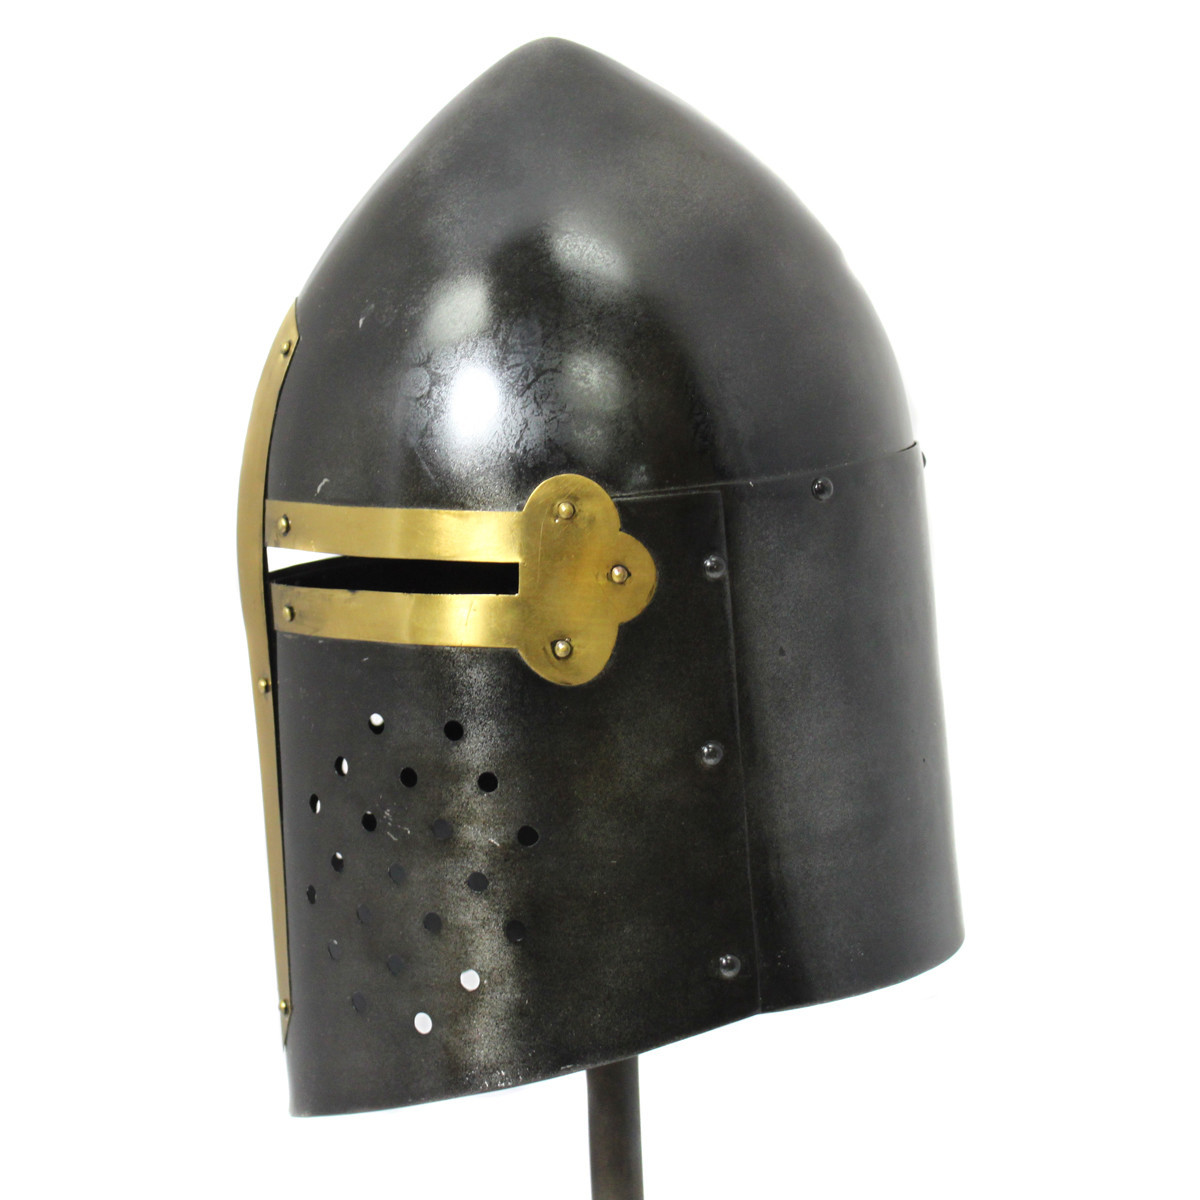 Black Antique Medieval Sugar-loaf Armor Helmet ~ MEDIEVAL AGE ARMOR HELMET